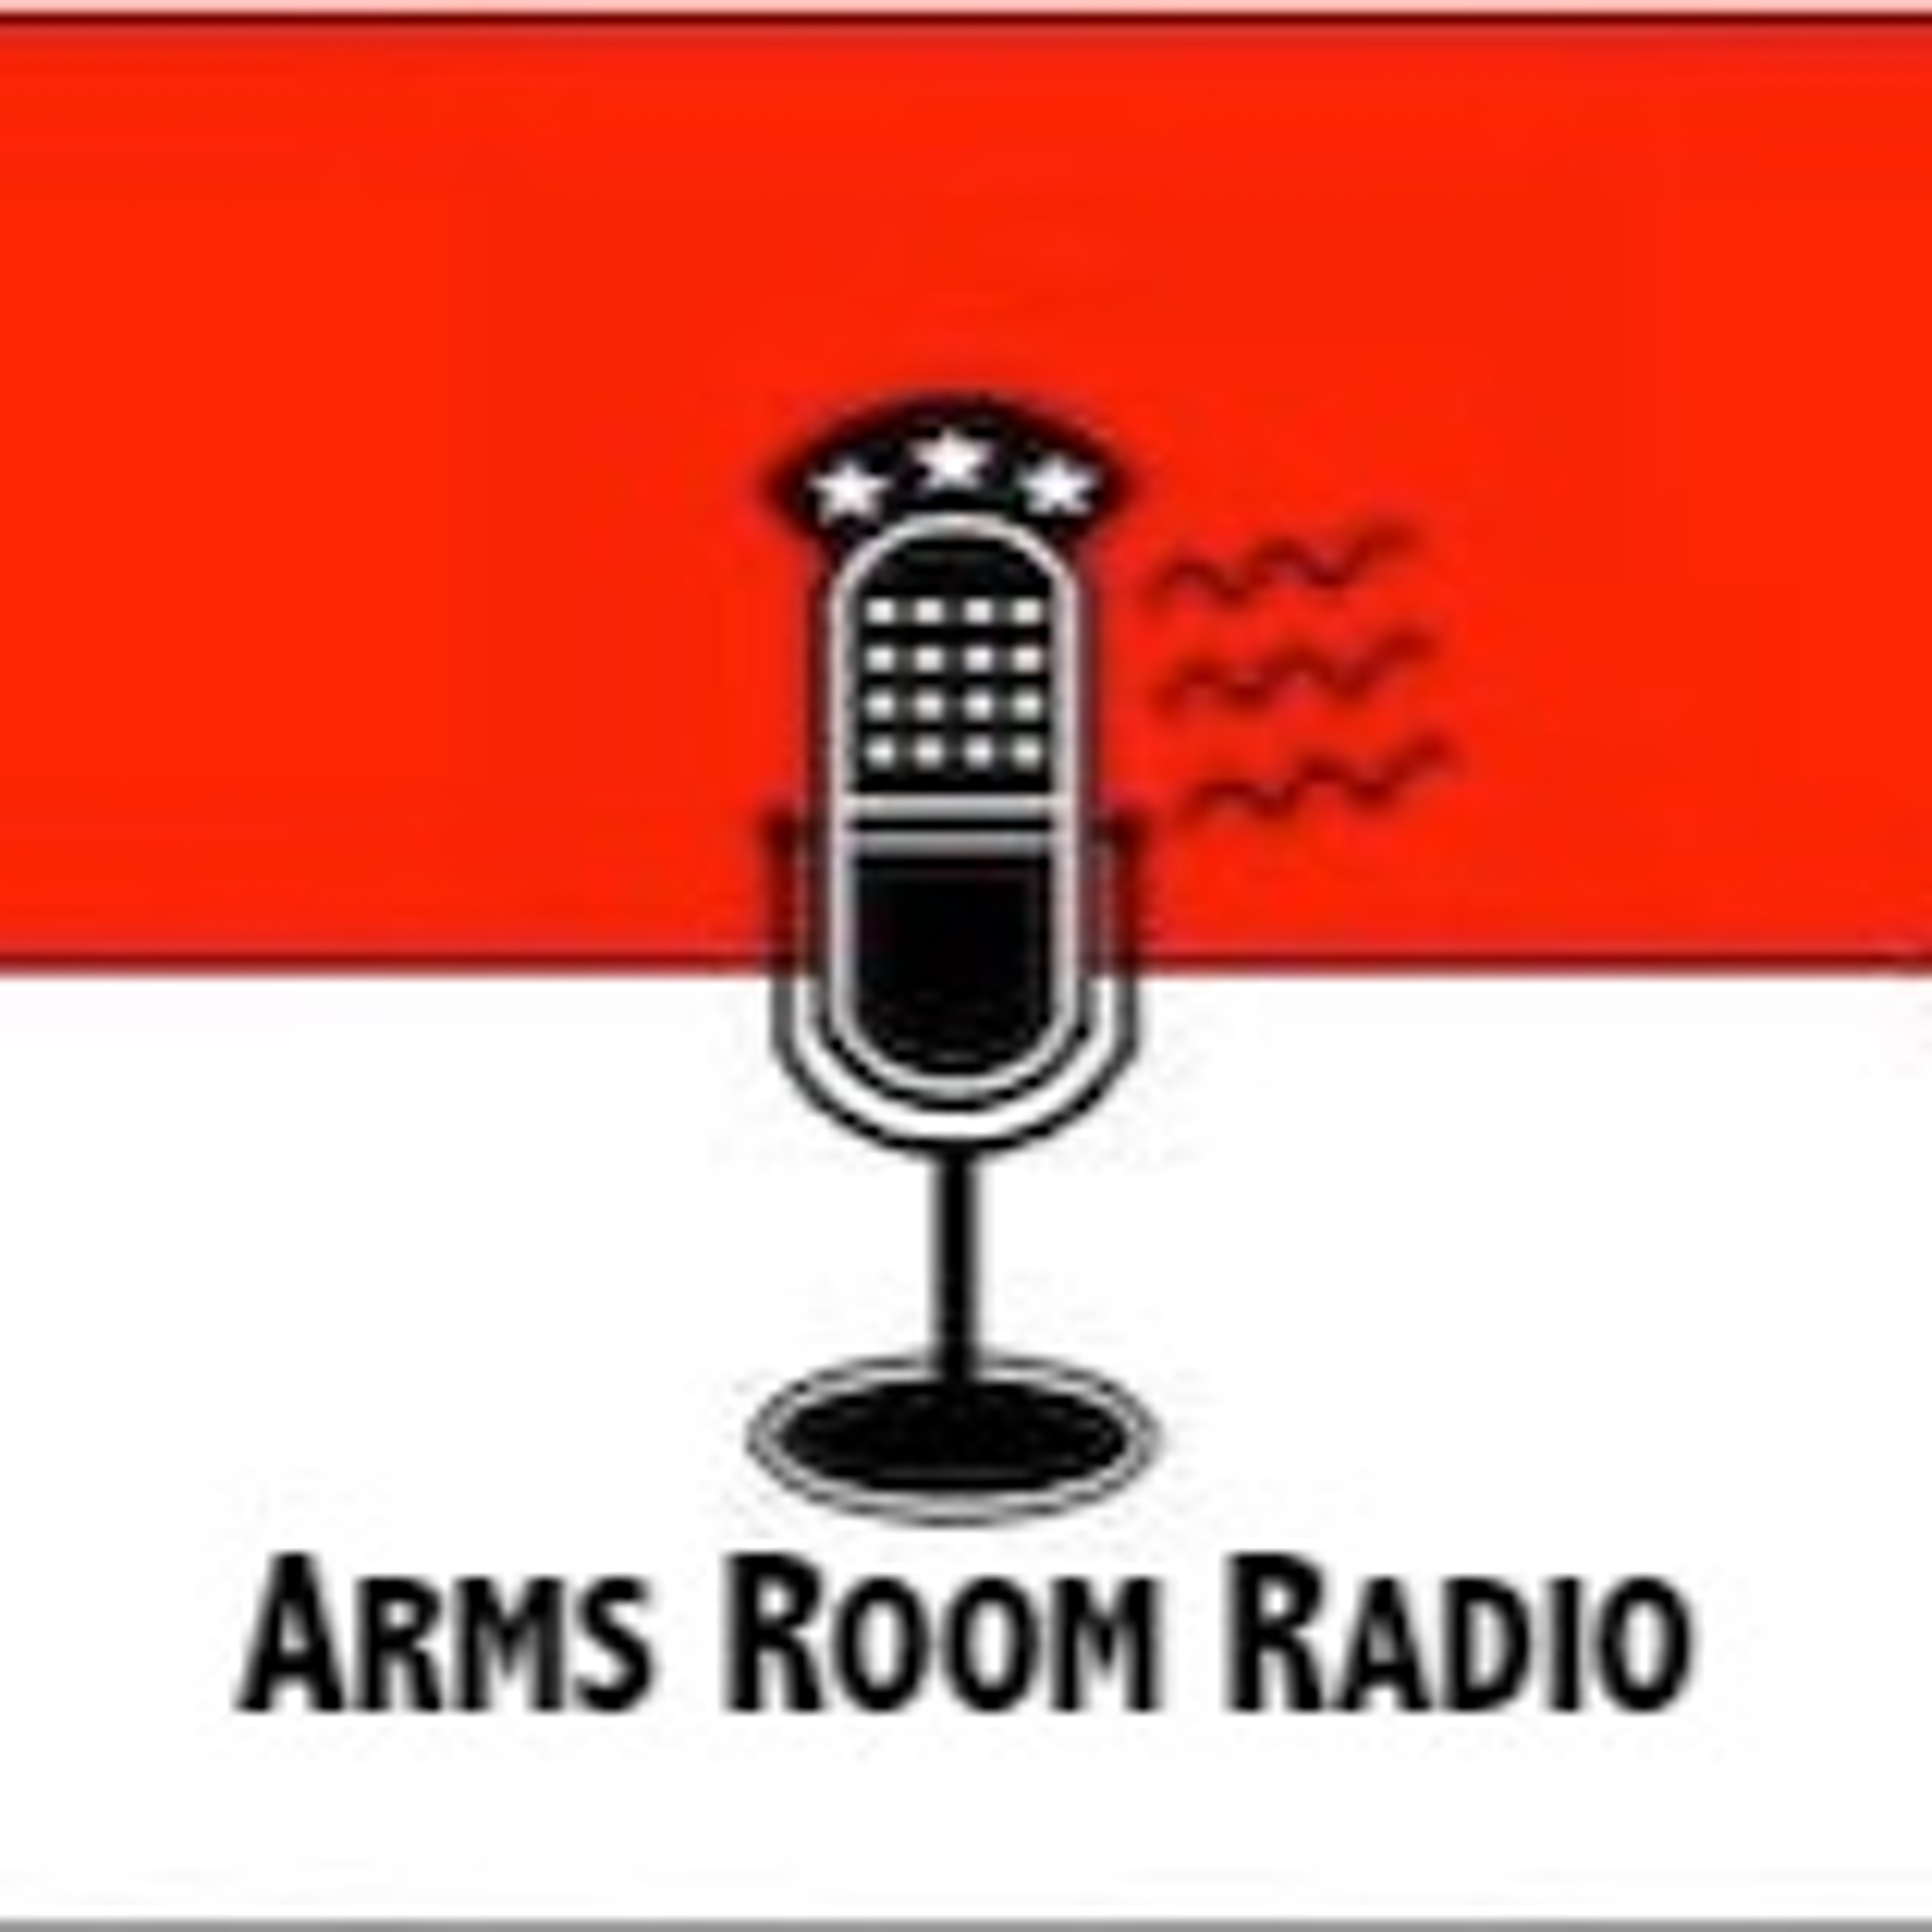 ArmsRoomRadio 11.17.18 DC Carry, I-1639